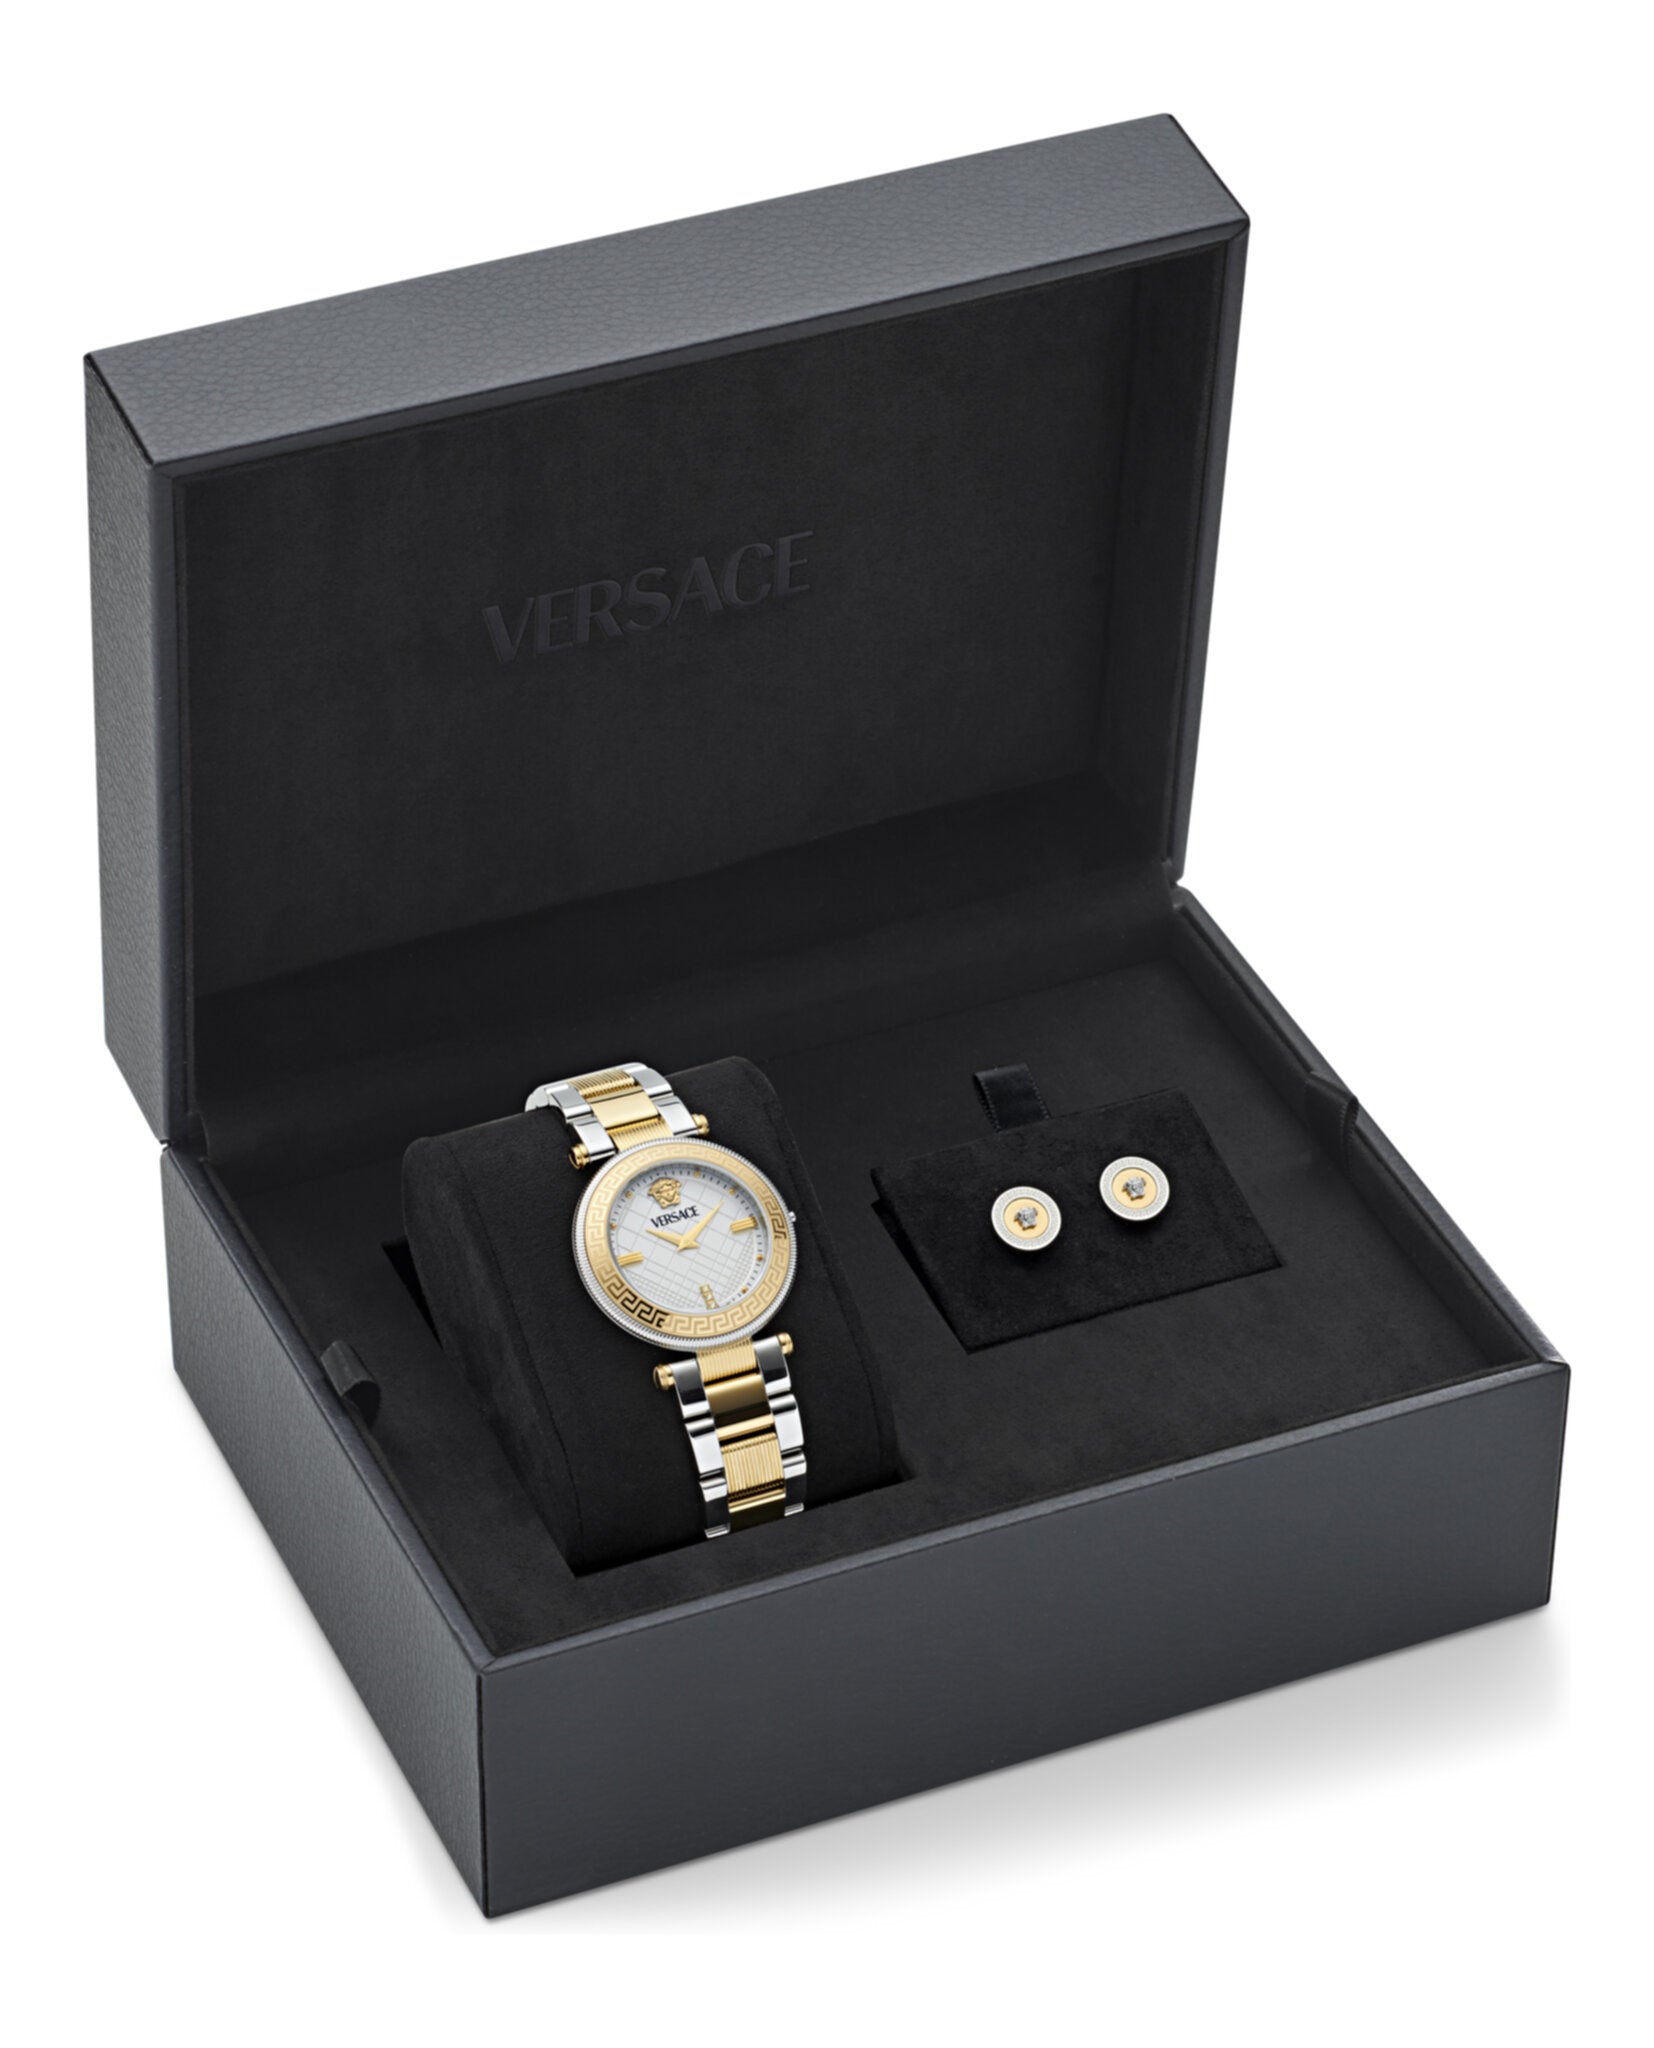 Versace Reve Diamond Watch Box Set